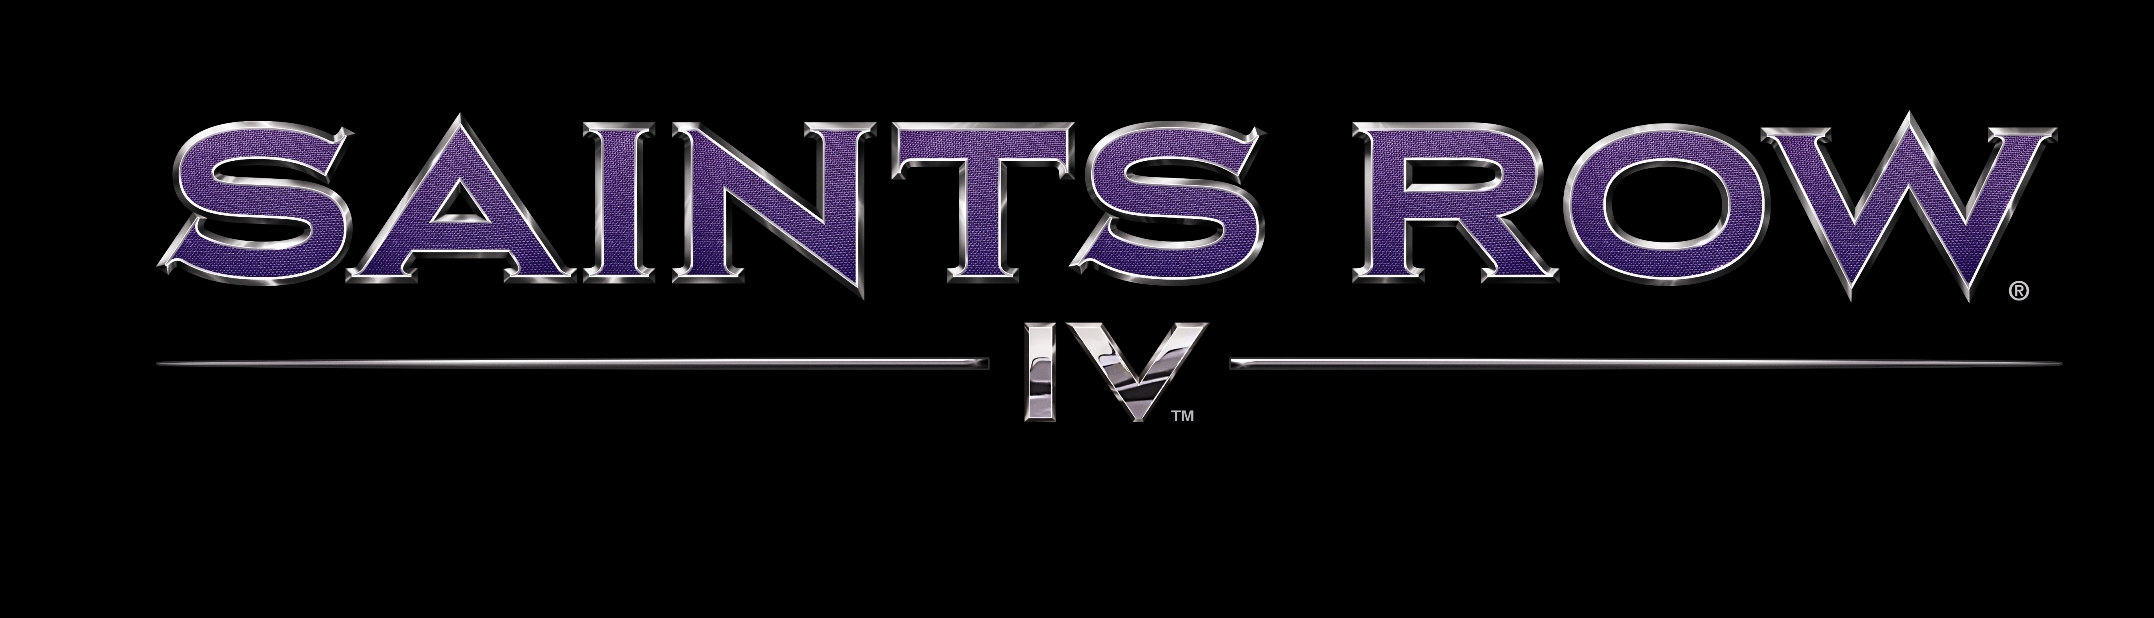 Saints Row IV Revealed SR4 Logo